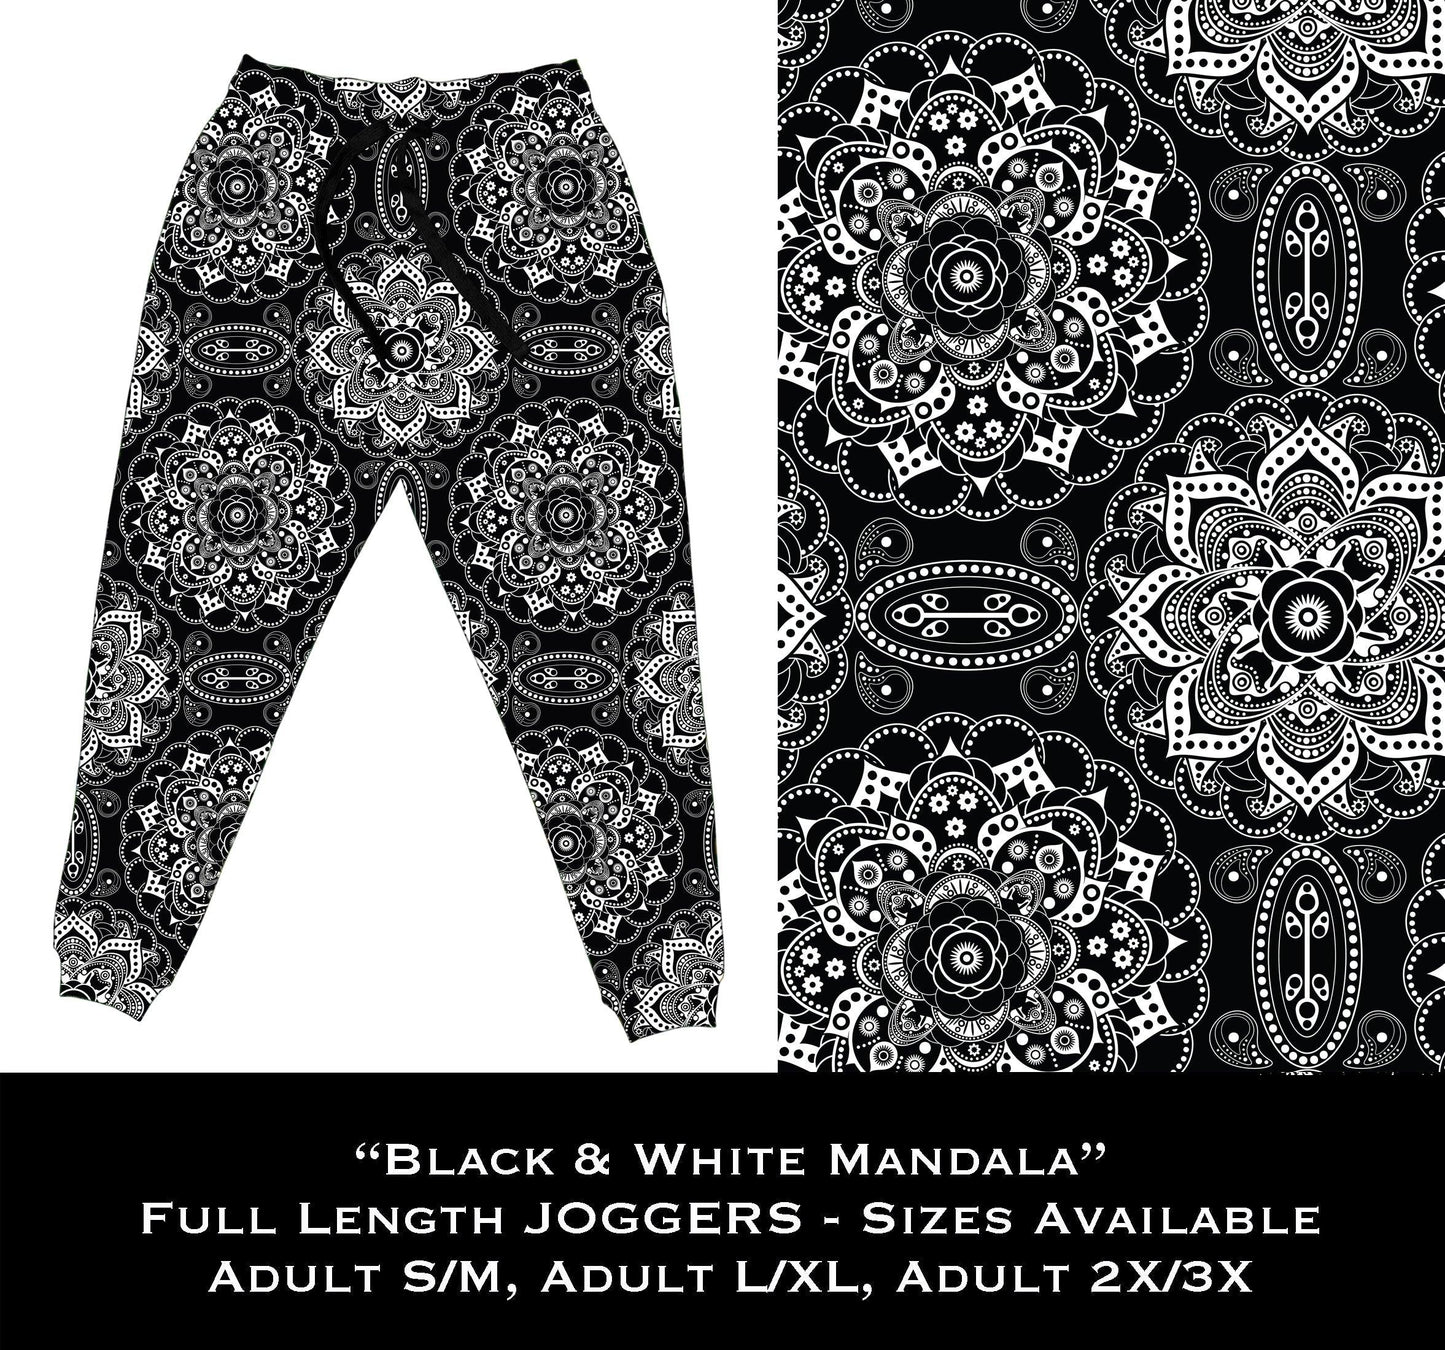 Black & White Mandala - Full Joggers - That’s So Fletch Boutique 